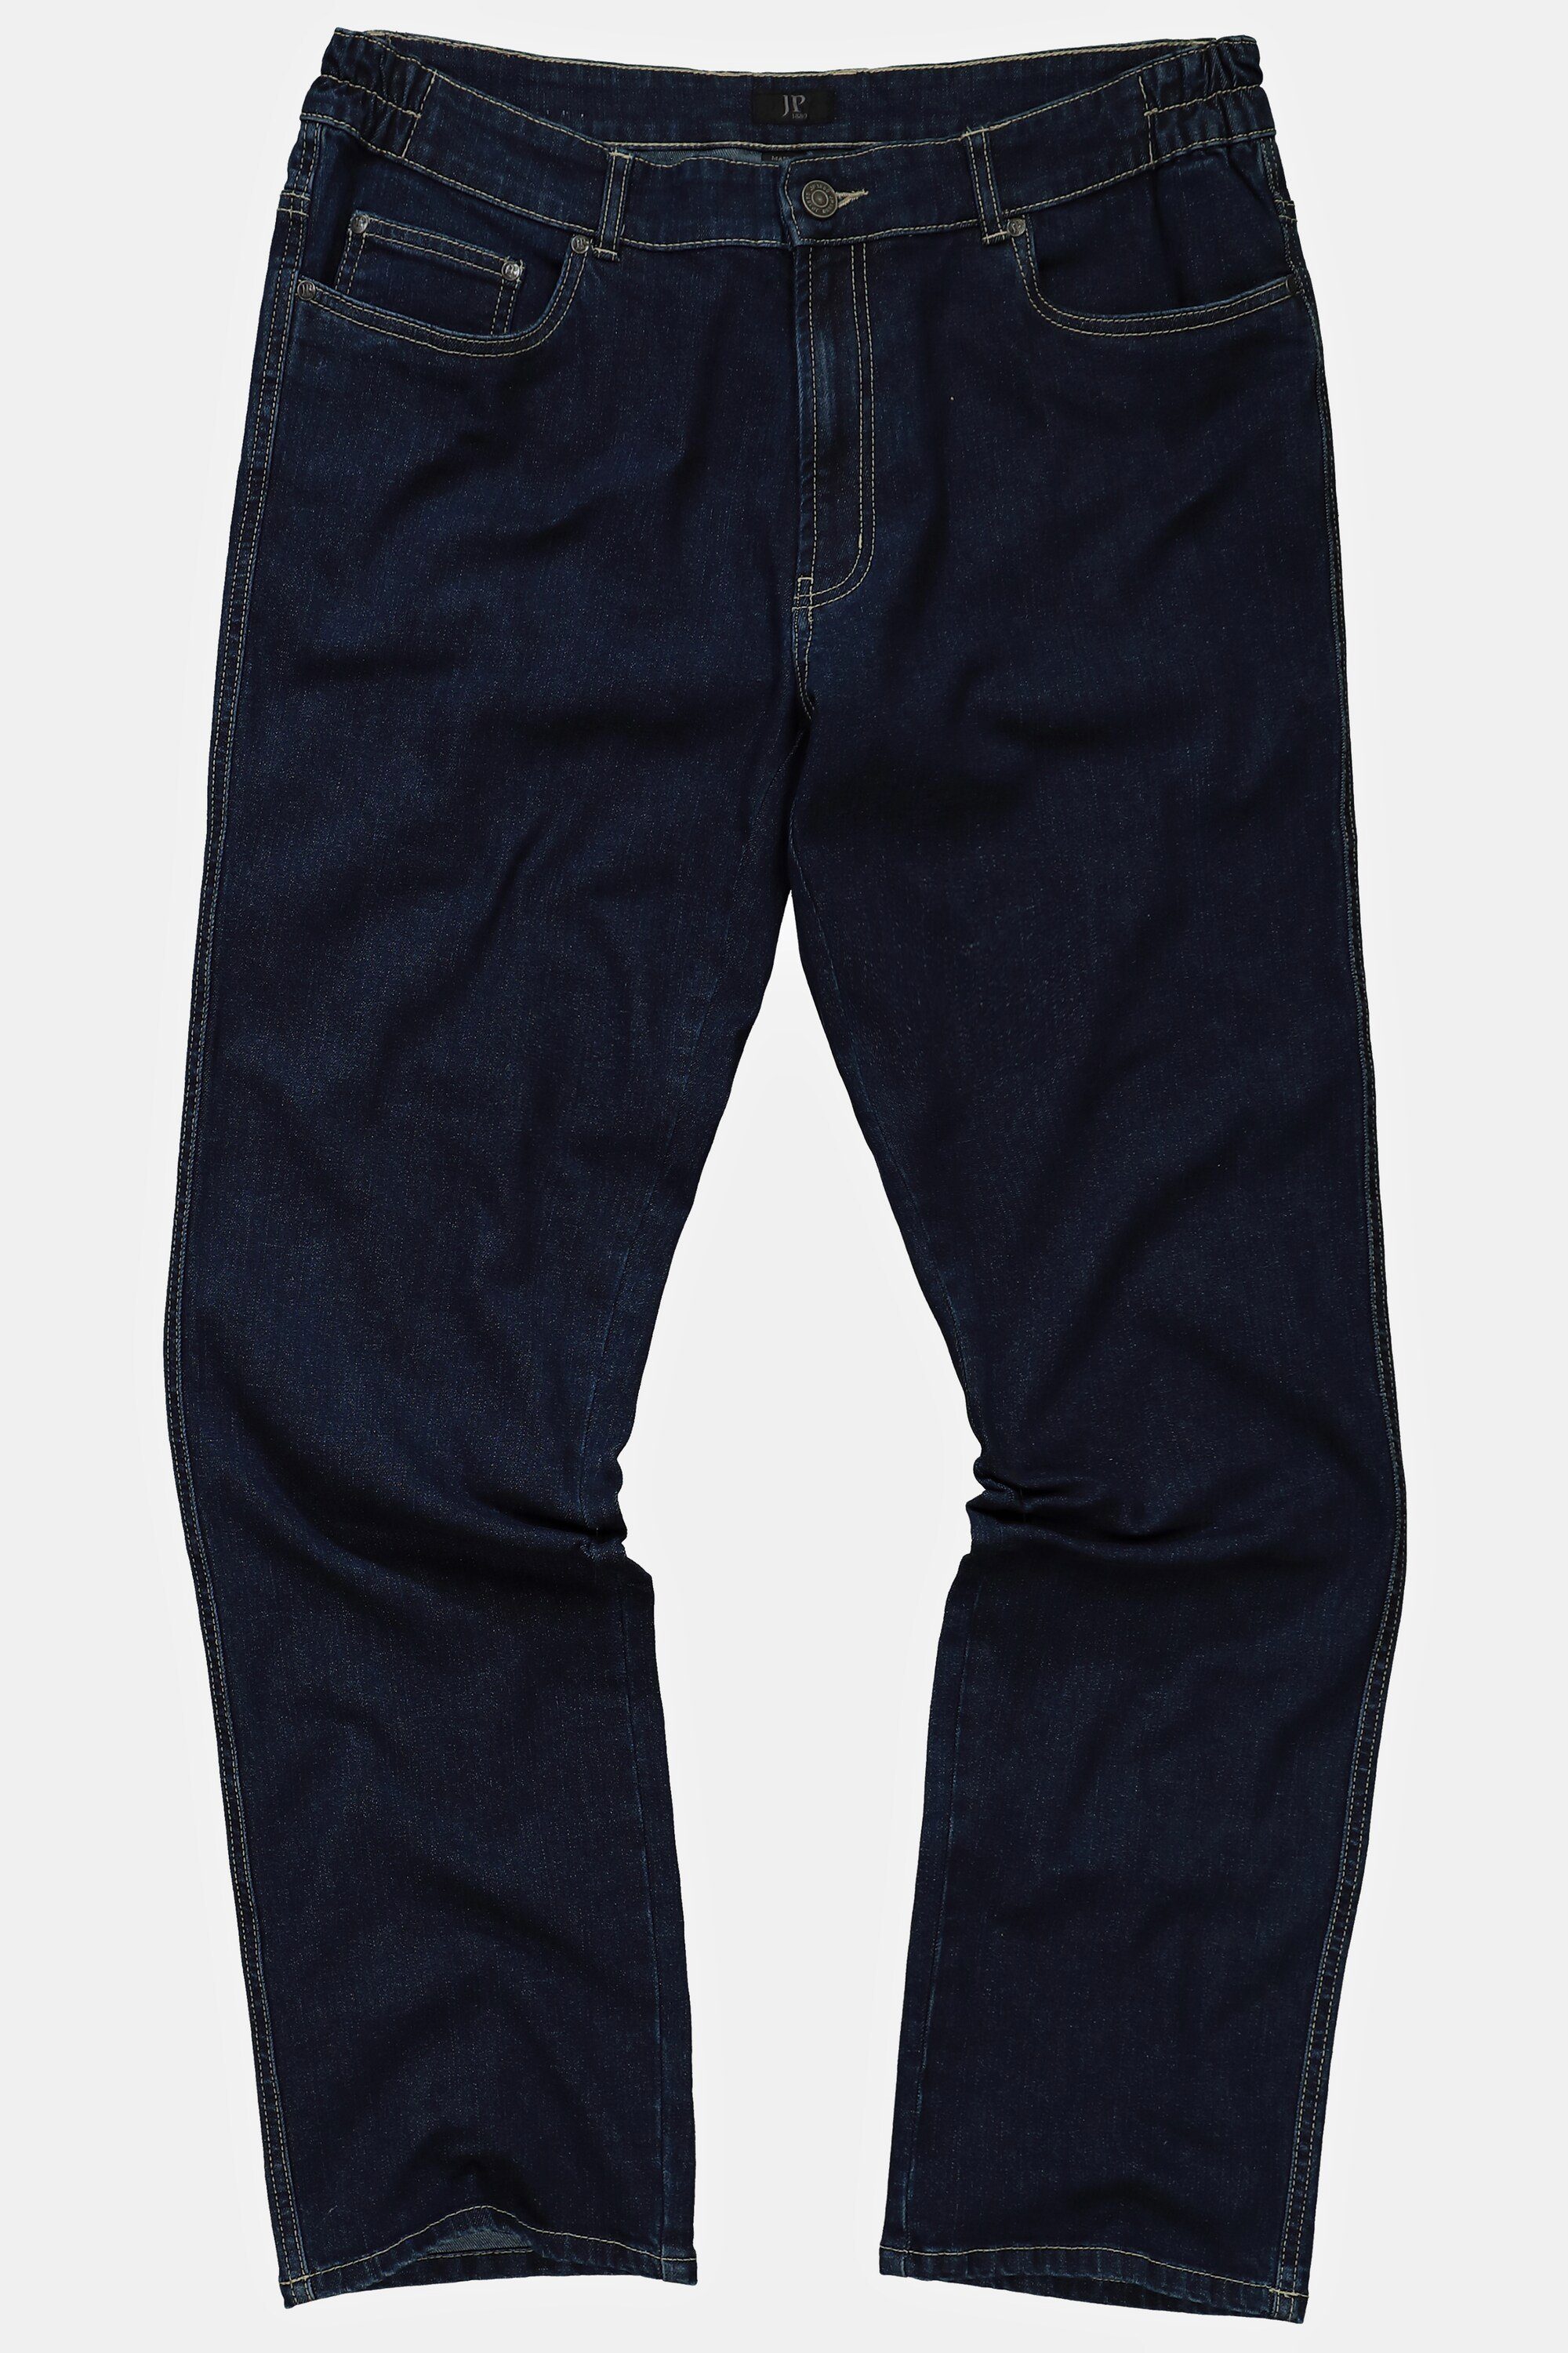 Traveller-Jeans blue JP1880 denim Regular Cargohose Bund elastischer Fit